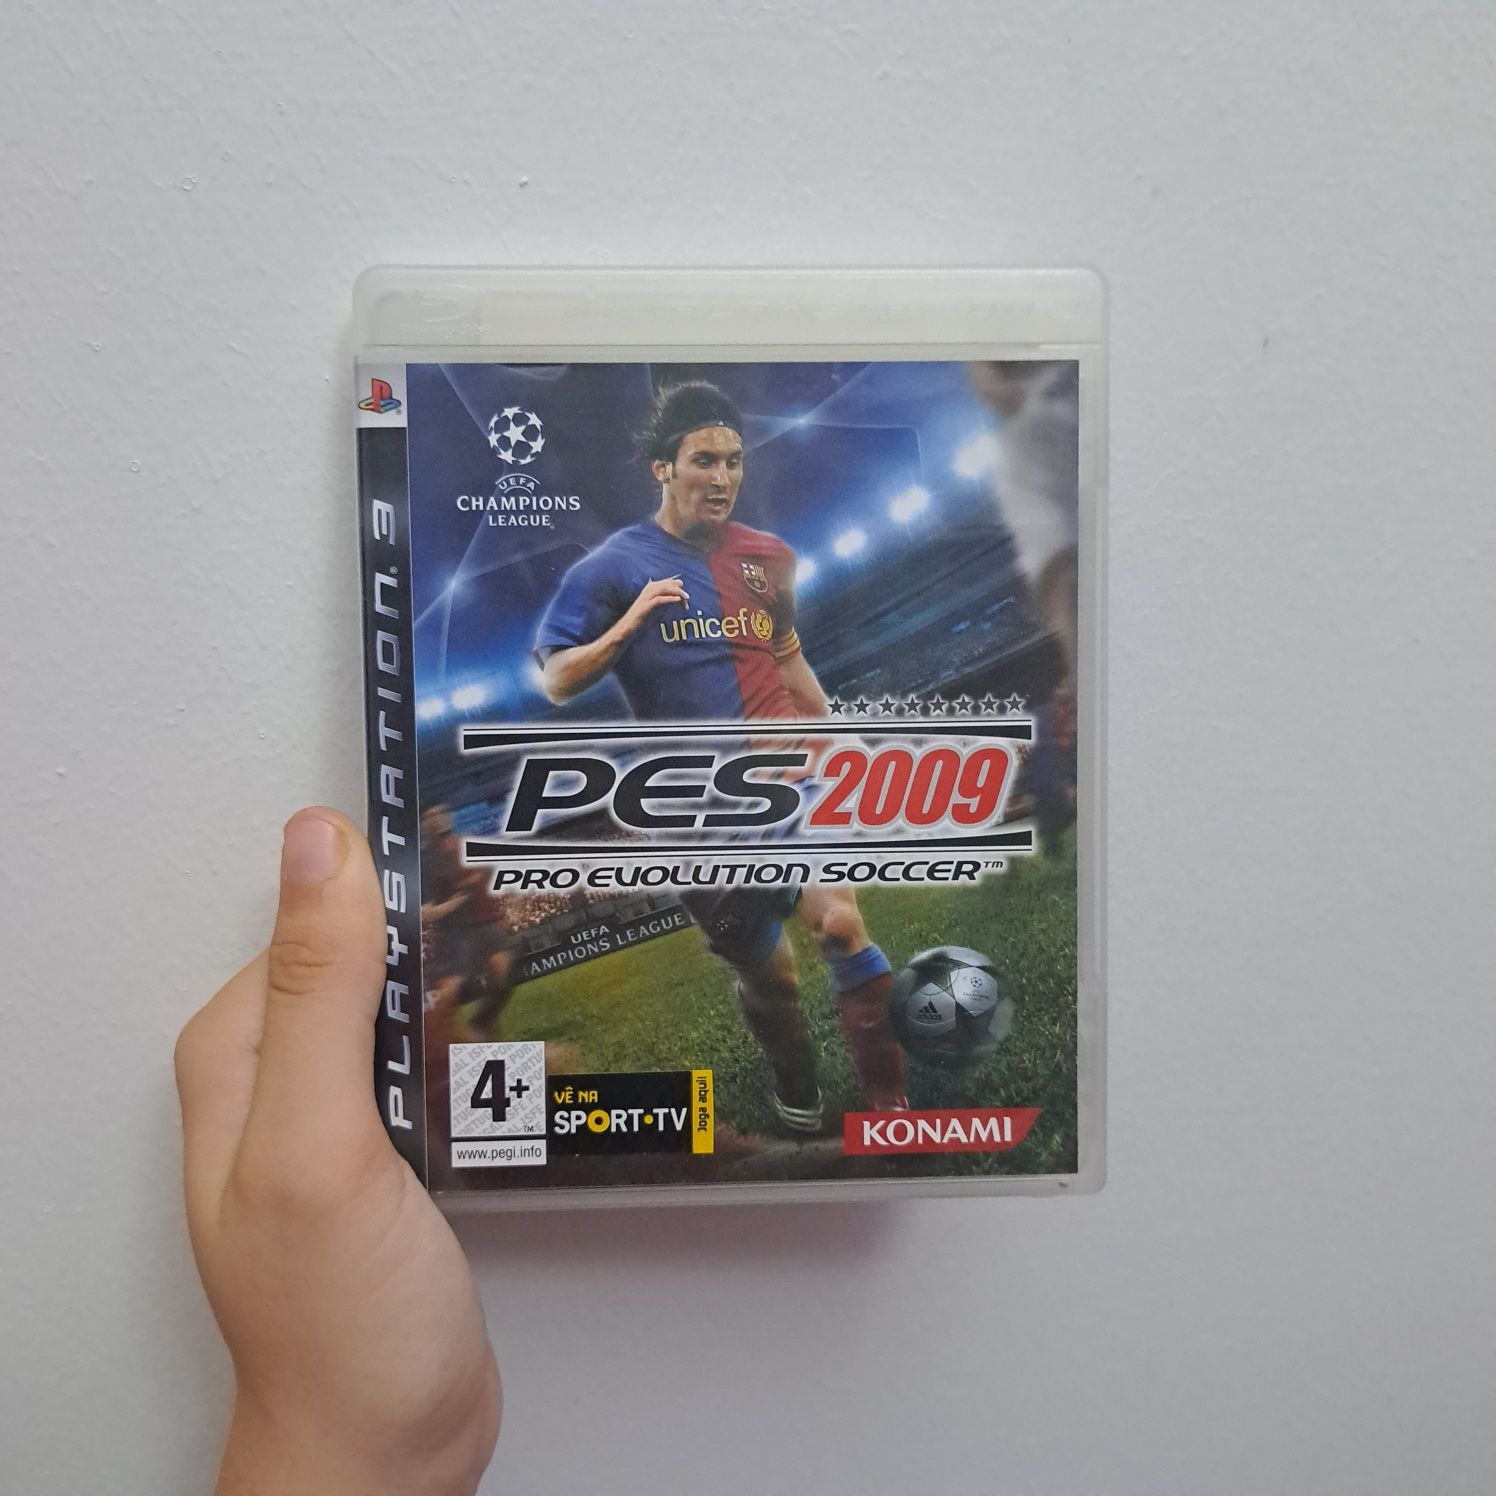 Korami Pro-Evolotion Soccer PES 2009 PS3